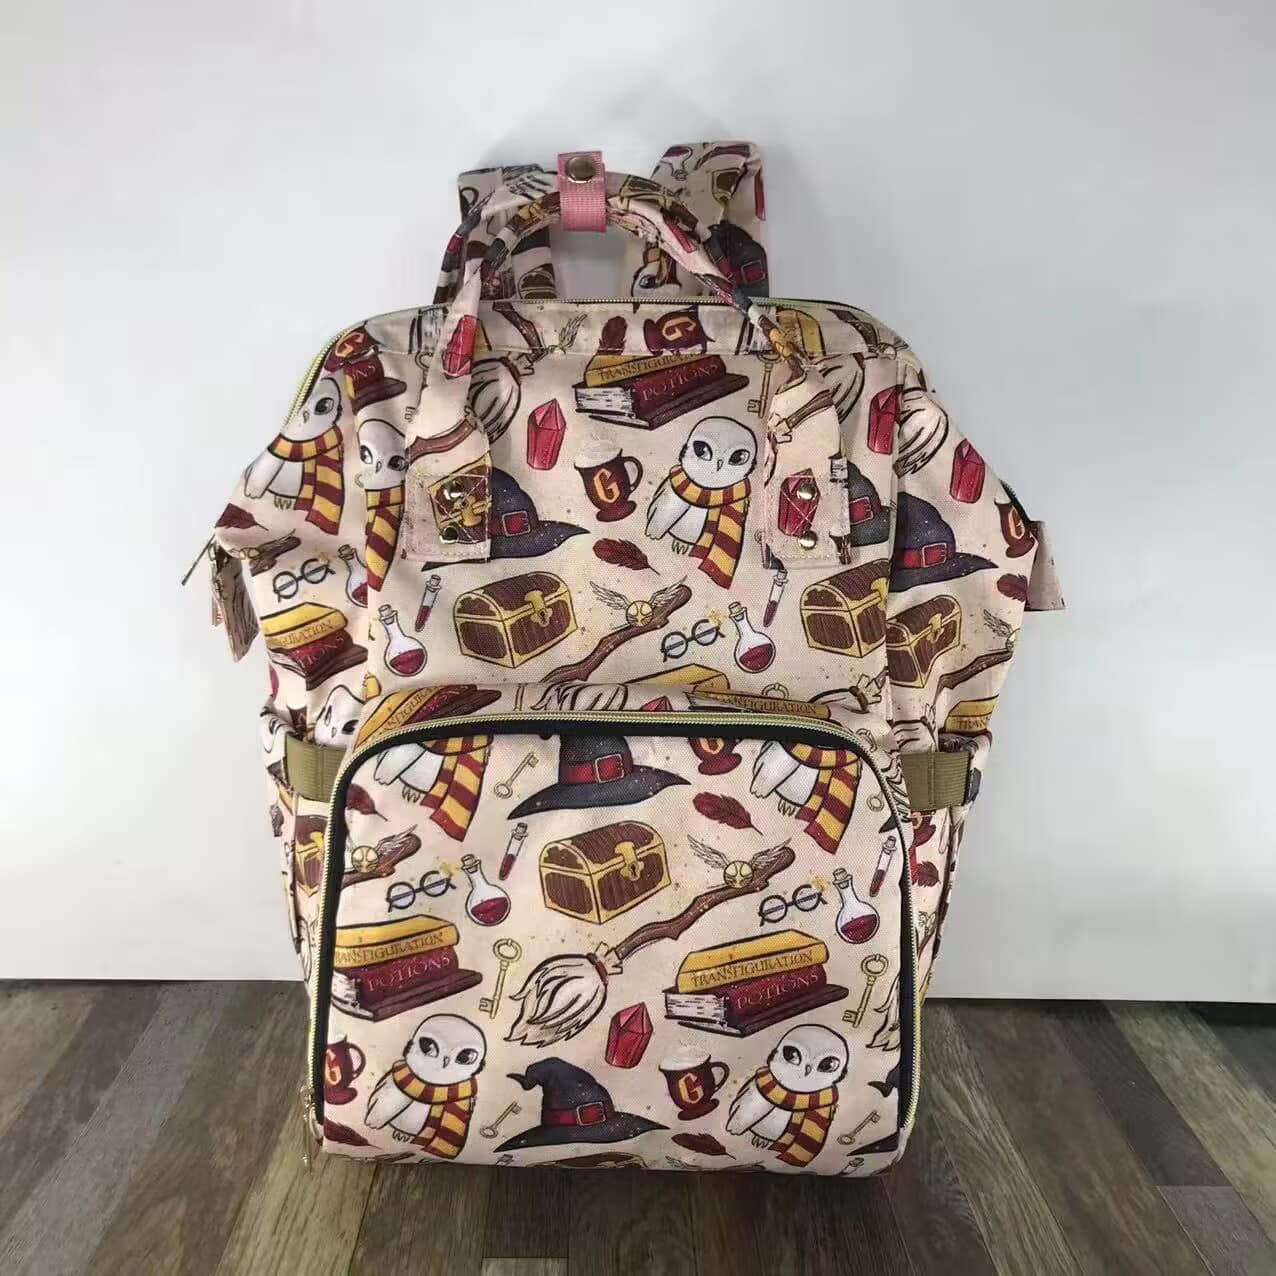 ᴡᴇᴇᴋʟʏ ᴘʀᴇ ᴏʀᴅᴇʀ Diaper Bag Backpack- Platform 9 3/4 10x16”